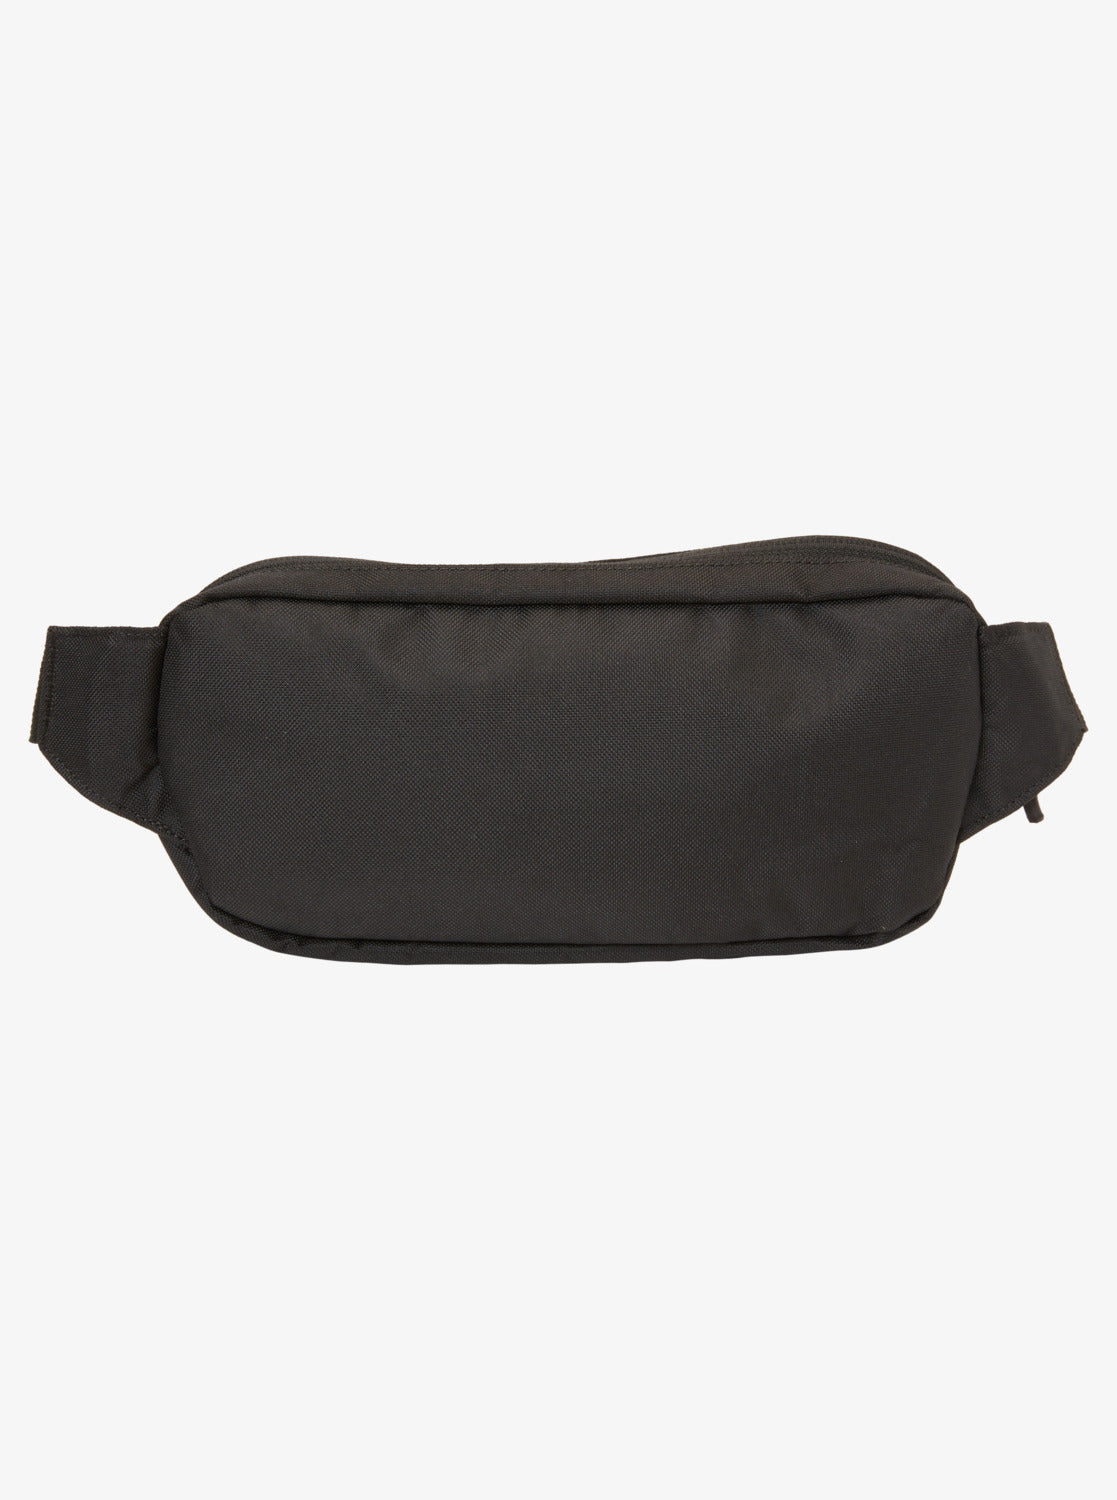 Quiksilver Pubjug 2.0 Waist Bag in Black AOP Mix Bag